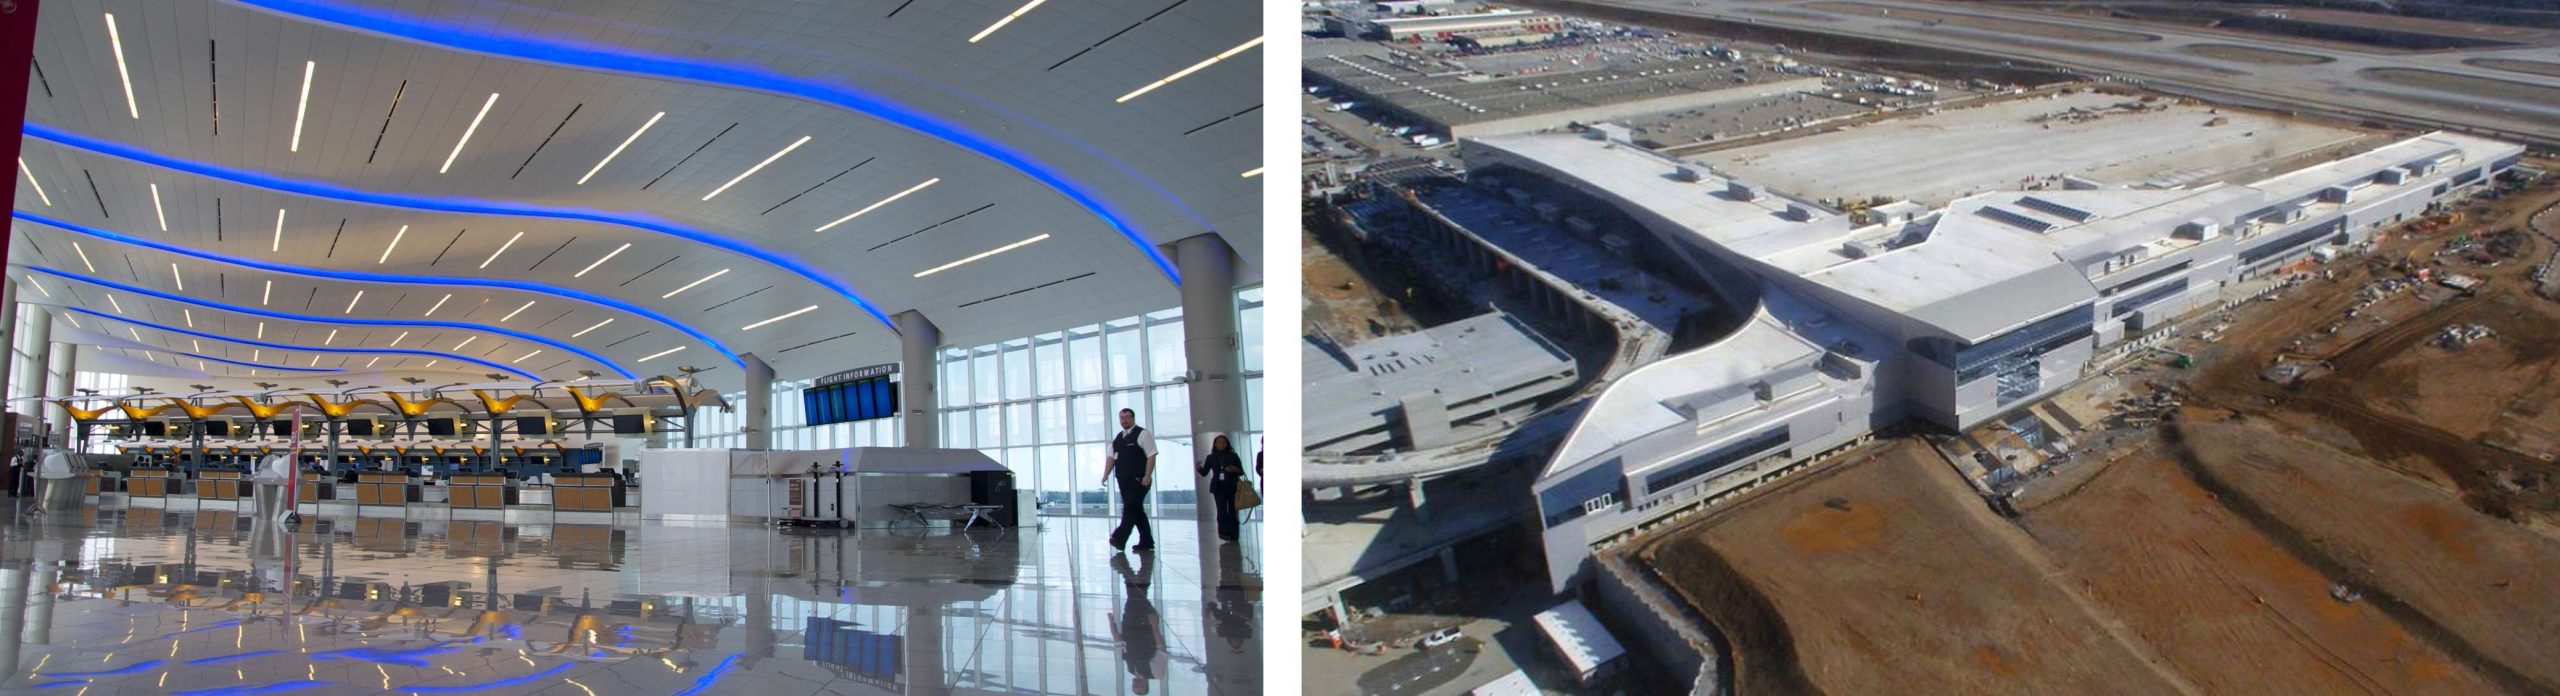 International terminal at Atlanta airport 